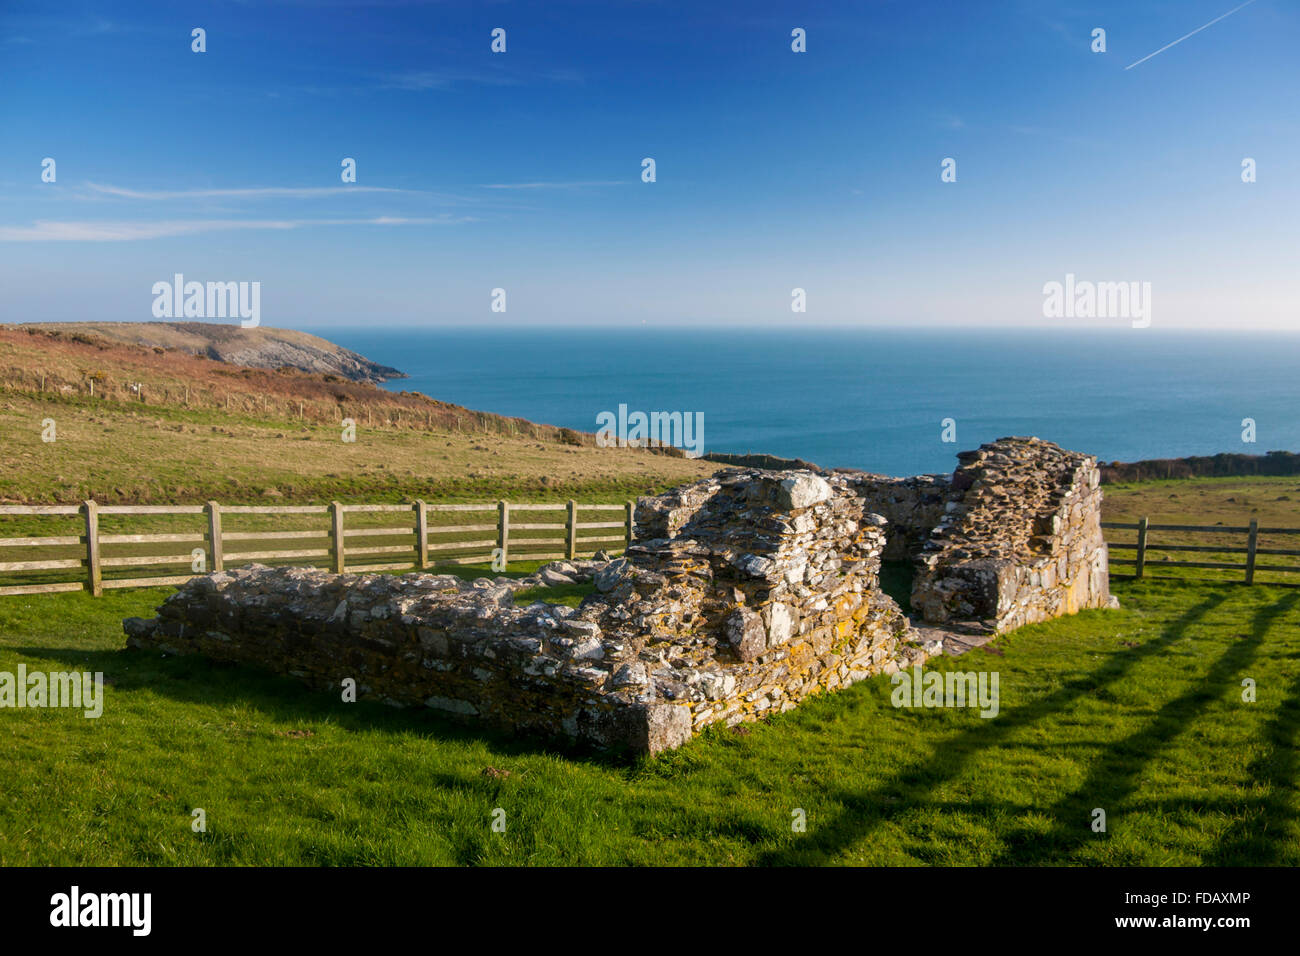 St Non's chapel ruin ruined remains Coastline in background Near St David's Pembrokeshire Wales UK Stock Photo